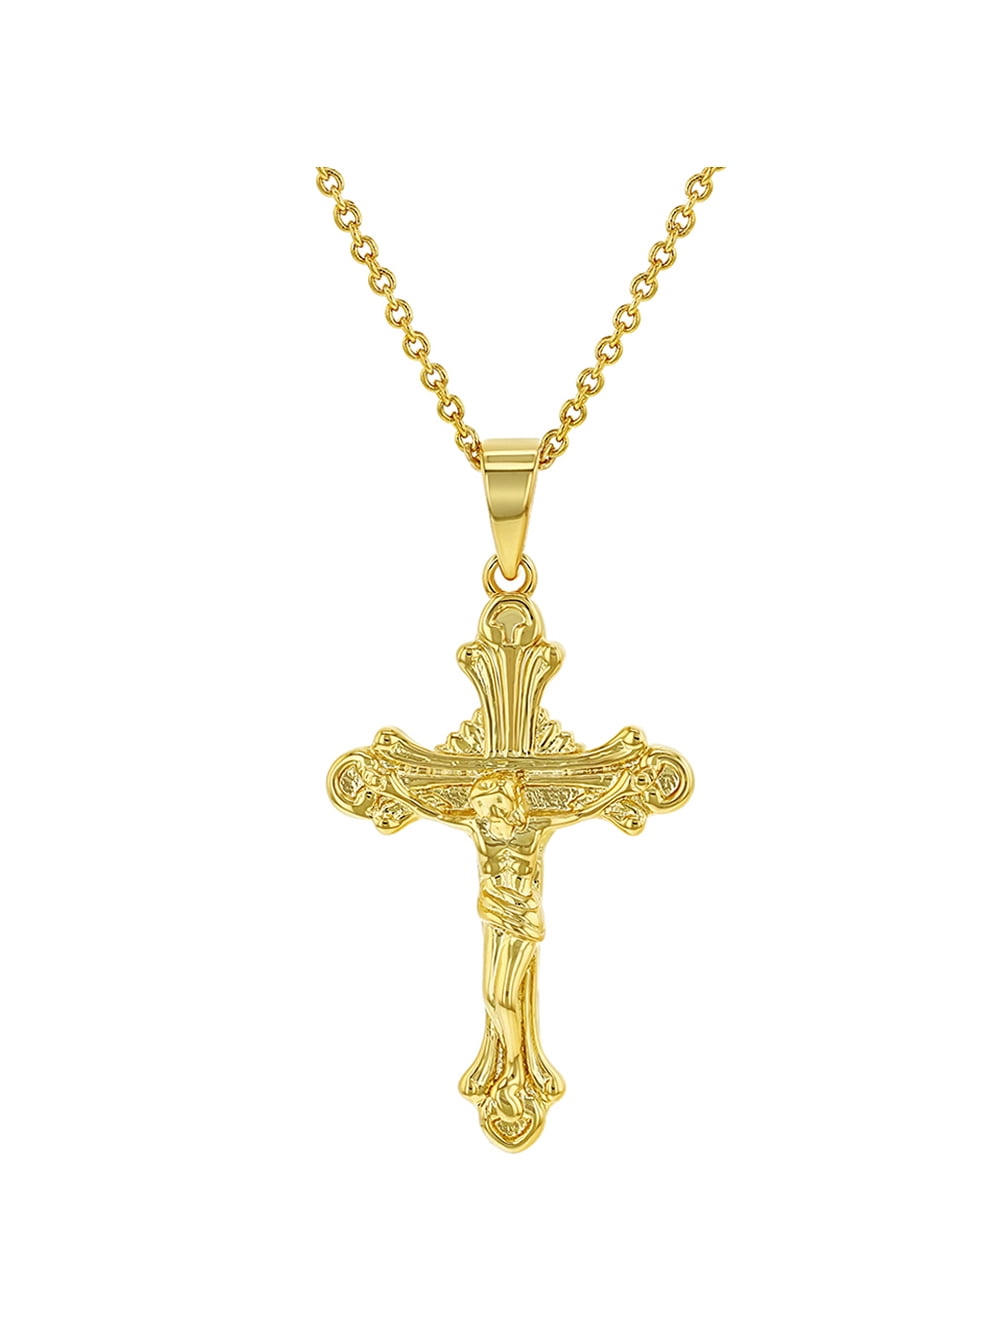 14K Yellow Gold 14x9mm Childrens Crucifix Pendant